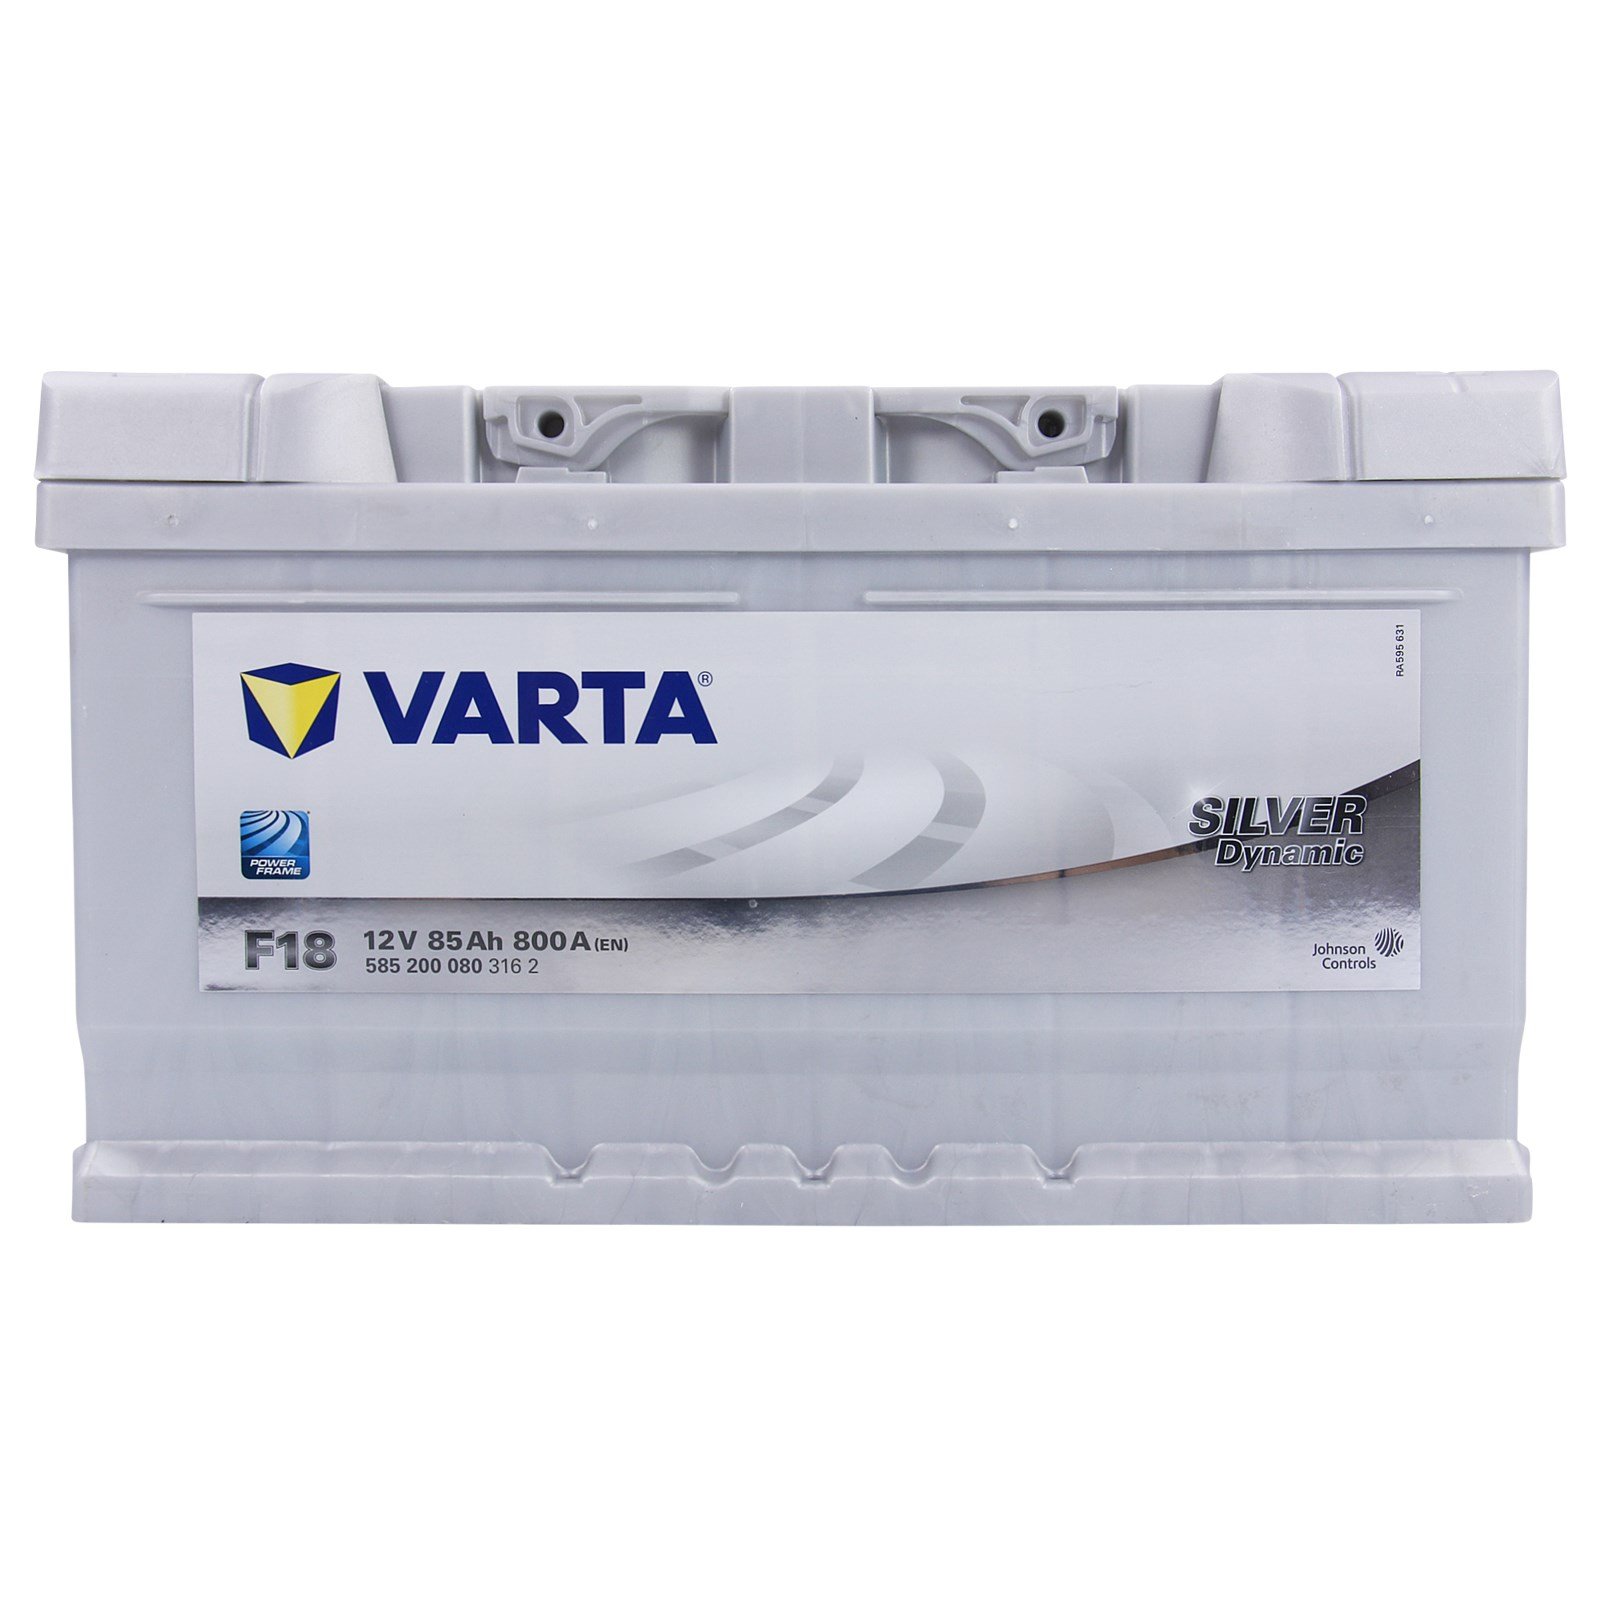 VARTA Silver Dynamic F18 Autobatterie 12V 85Ah 800A von Varta